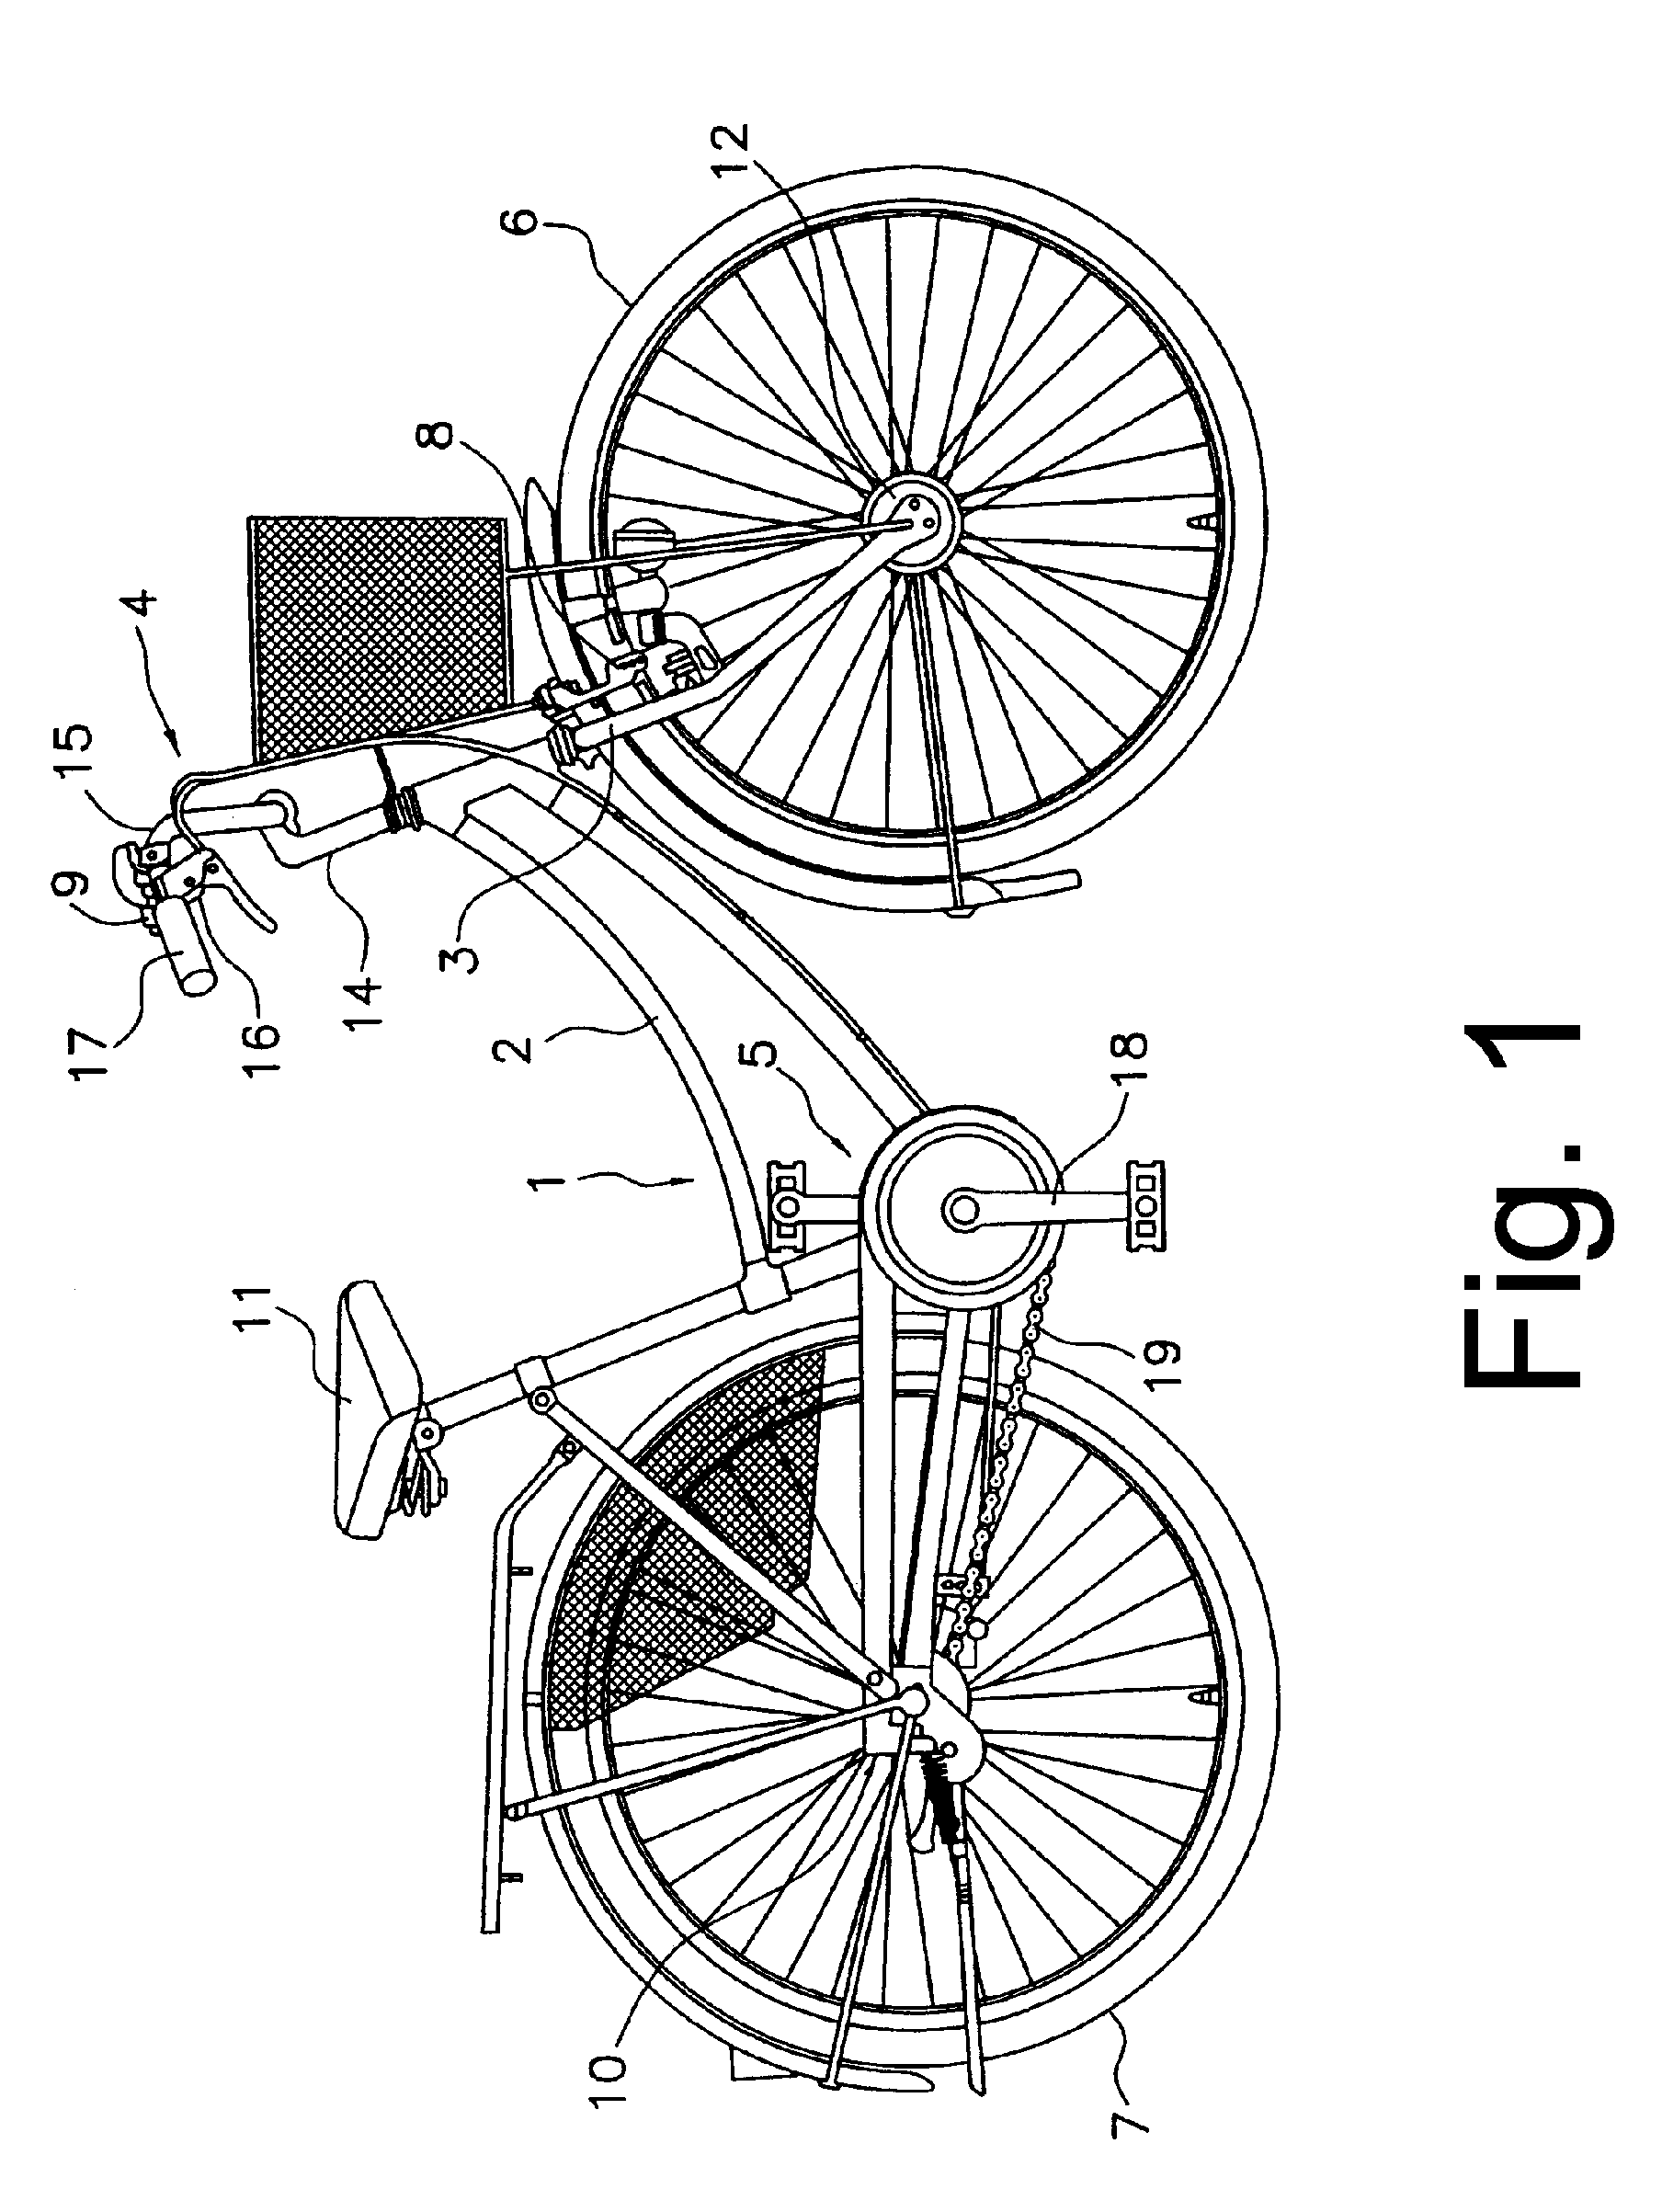 Bicycle shift control apparatus that cancels a tentative shift